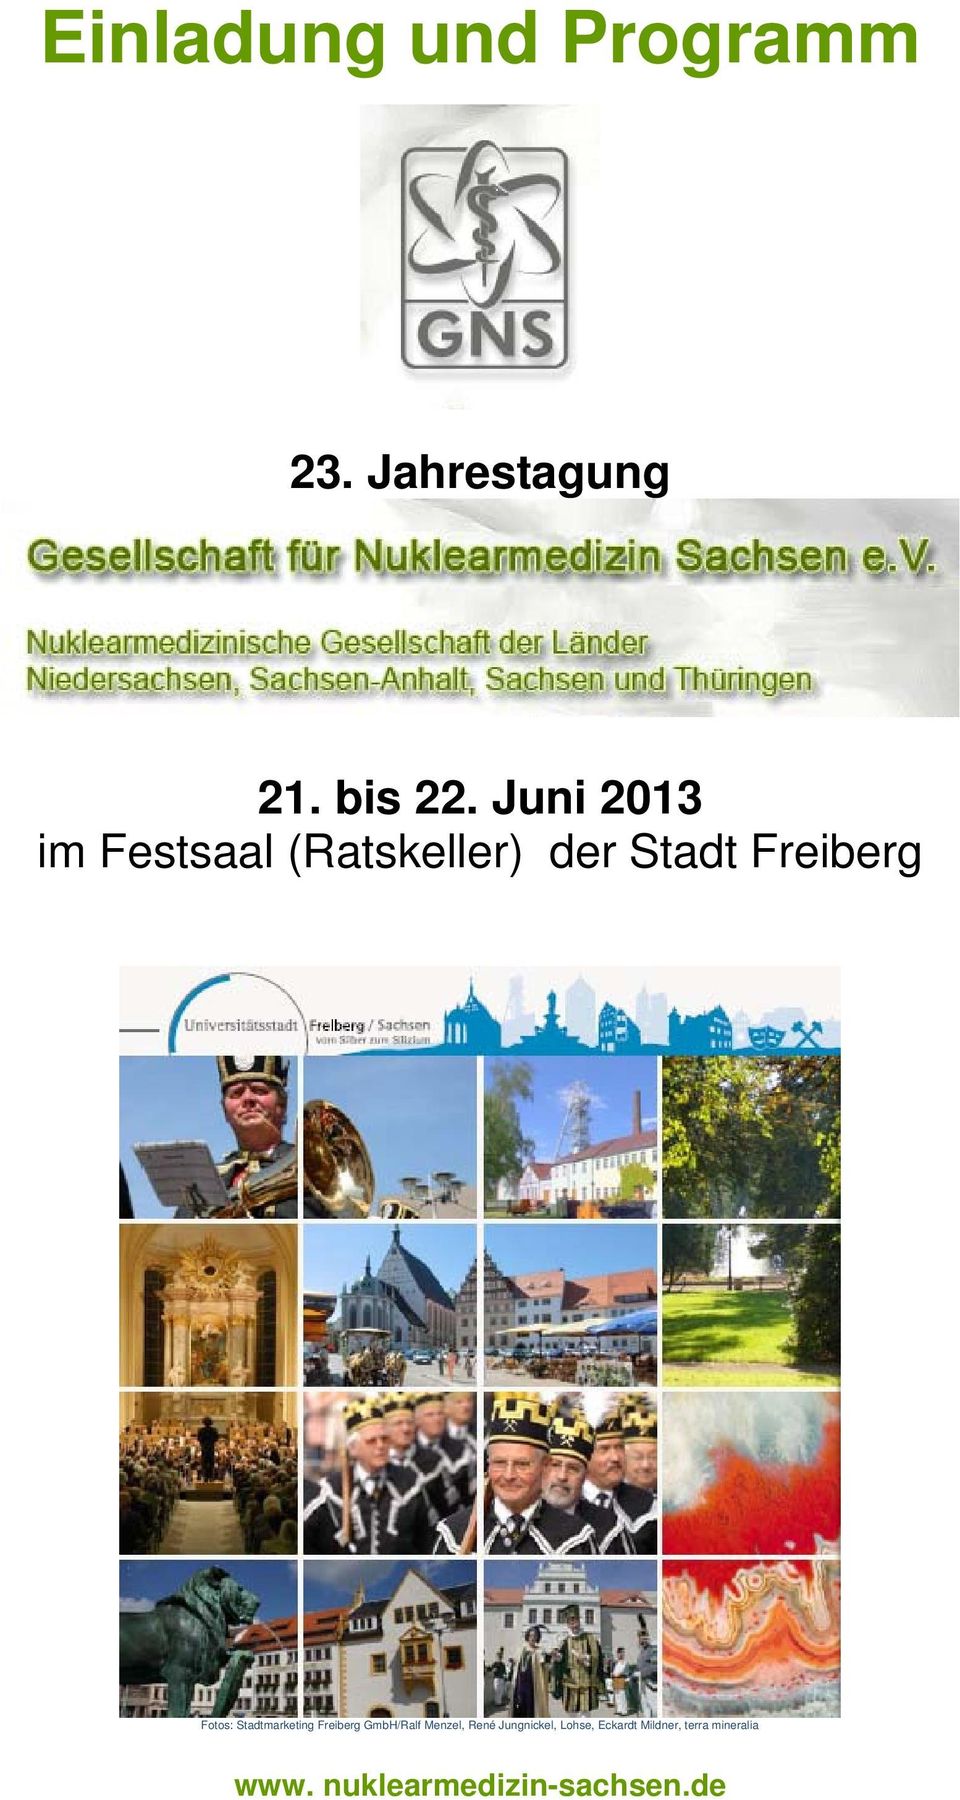 Stadtmarketing Freiberg GmbH/Ralf Menzel, René Jungnickel,